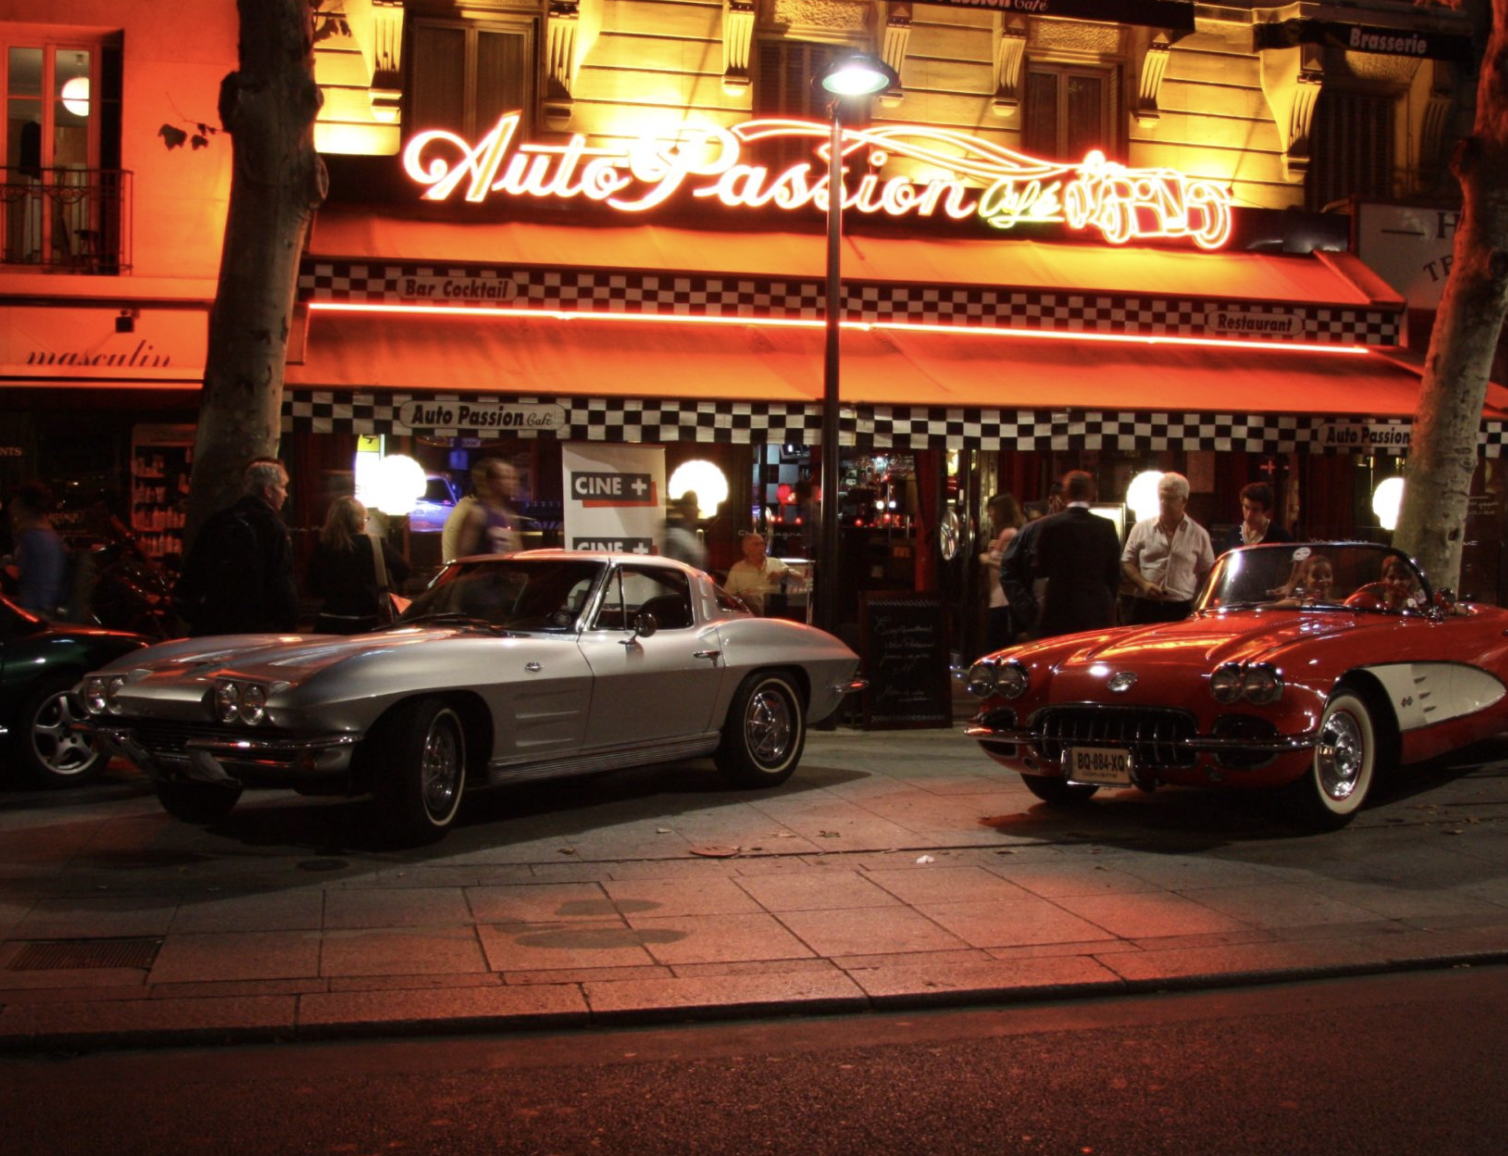 Auto Passion Café display of cars